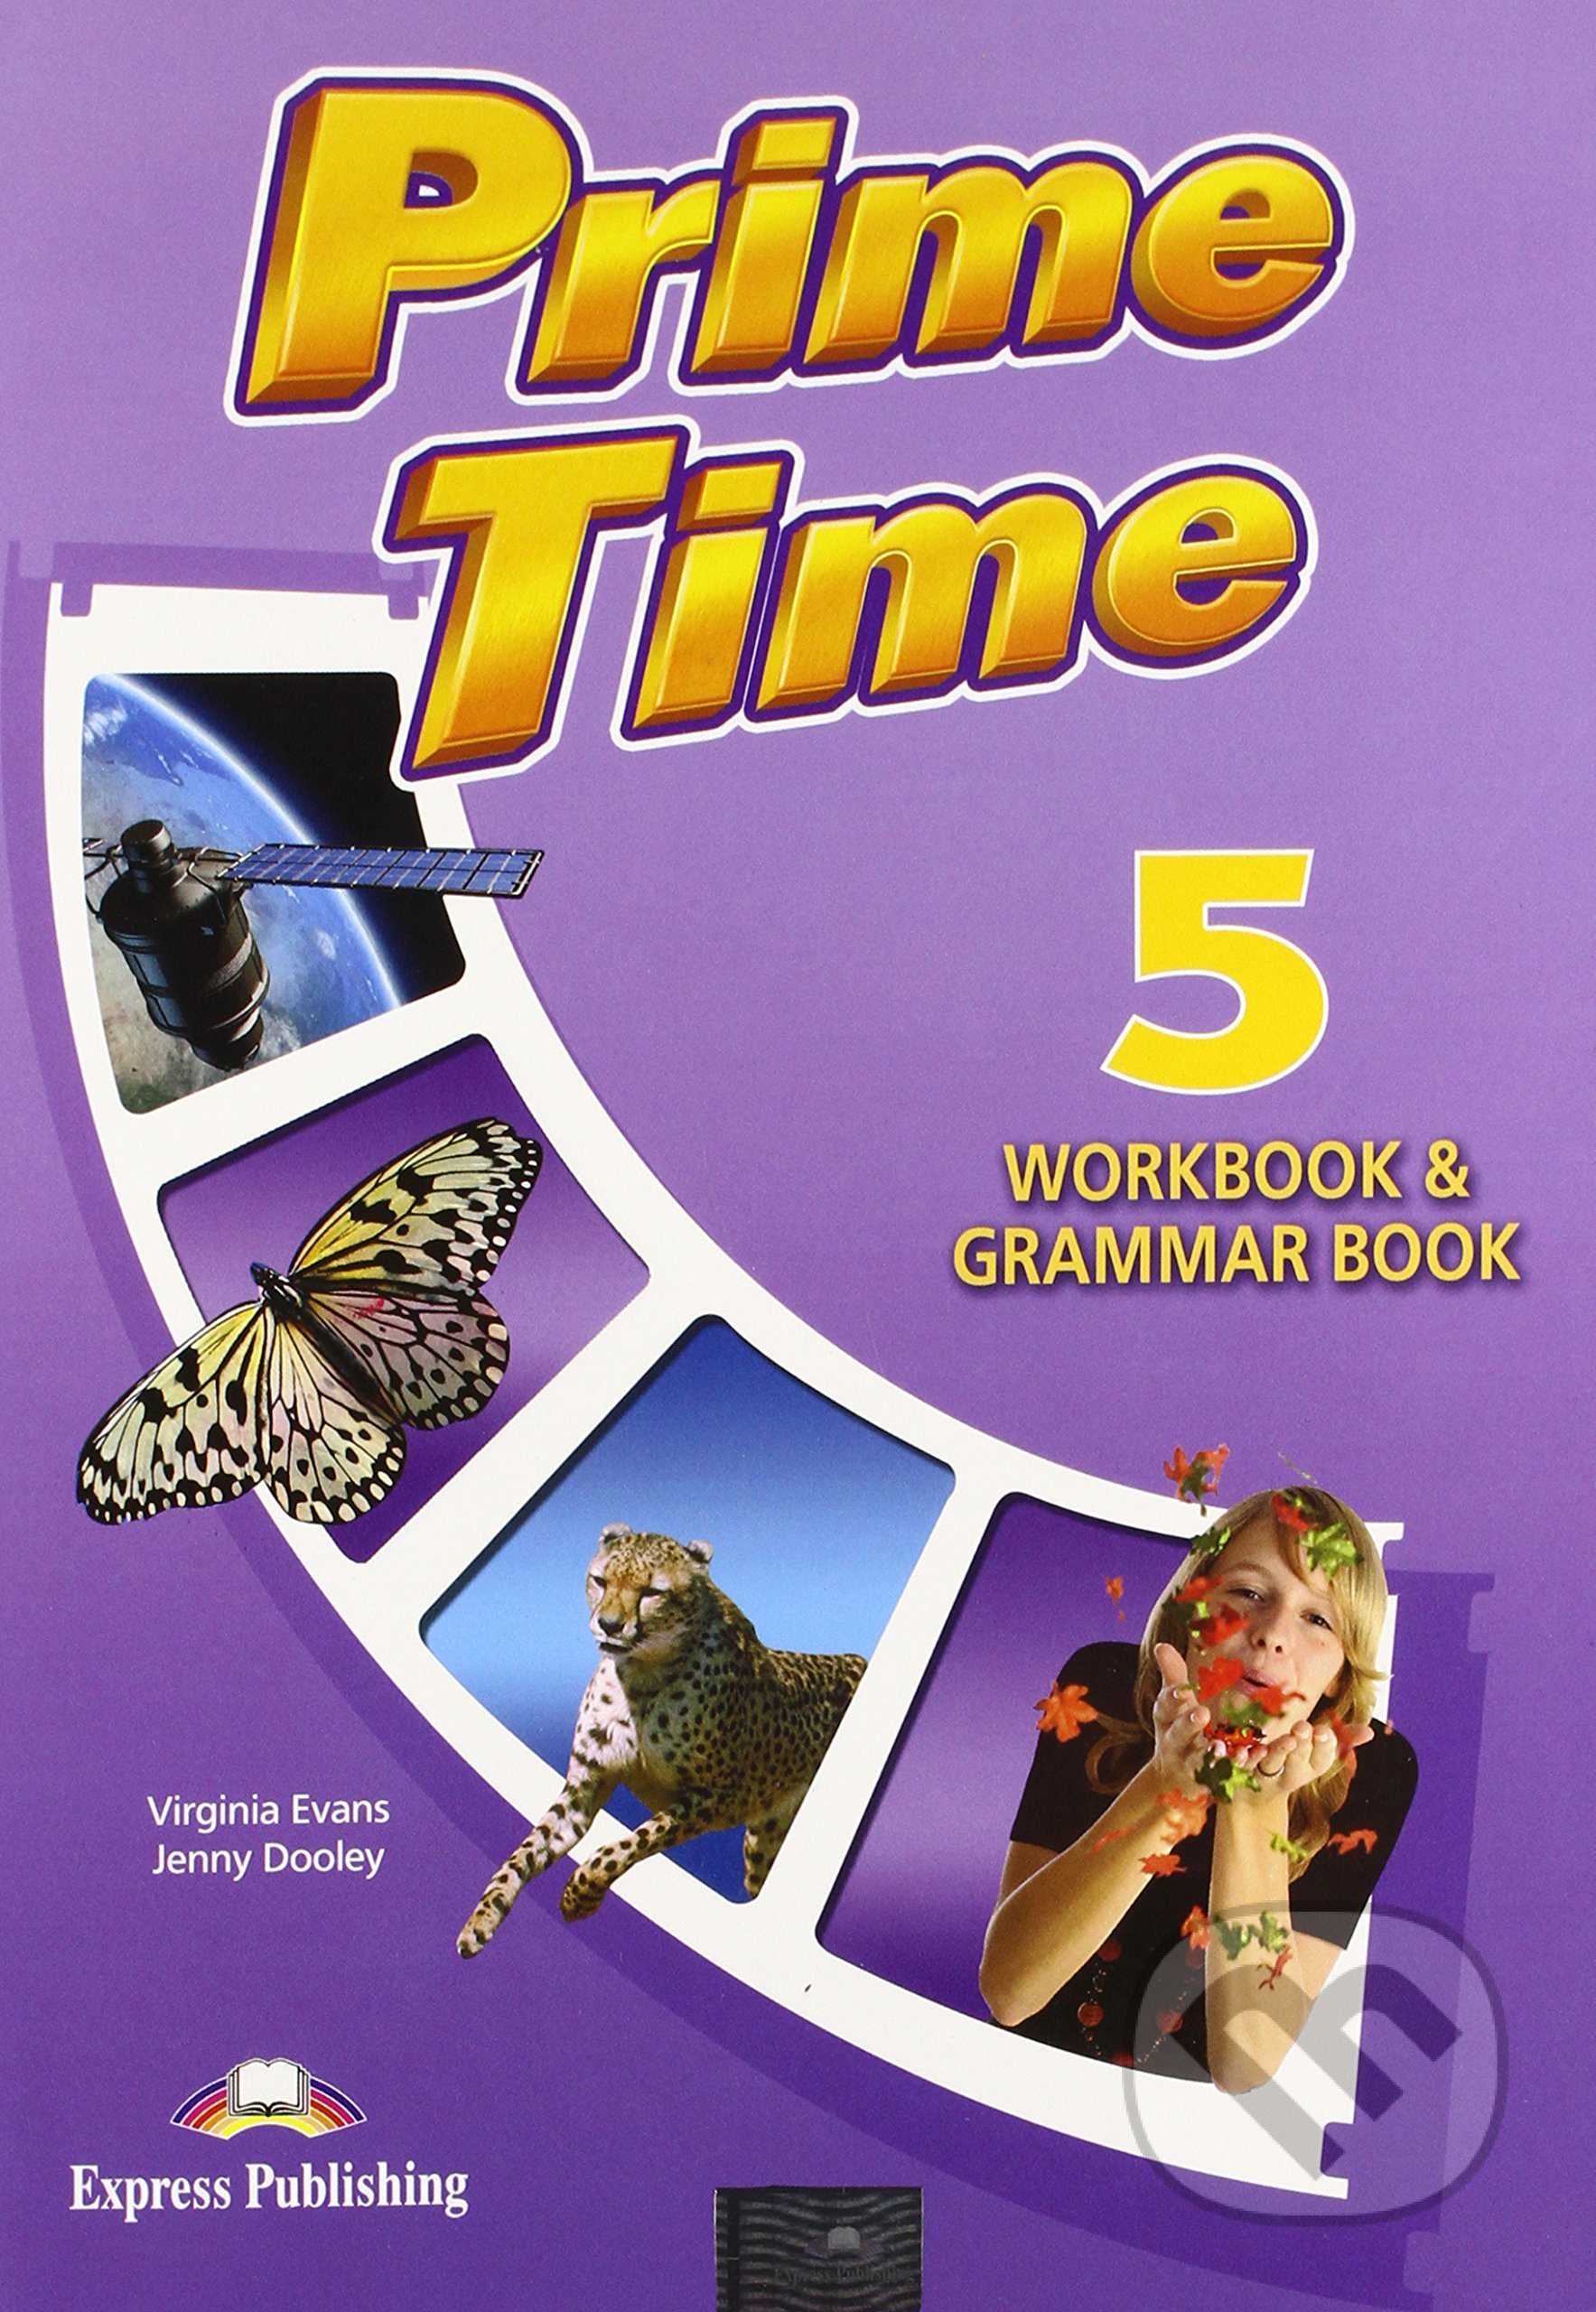 Prime Time 5: Workbook + Grammar book - Virginia Evans, Jenny Dooley, Express Publishing, 2012